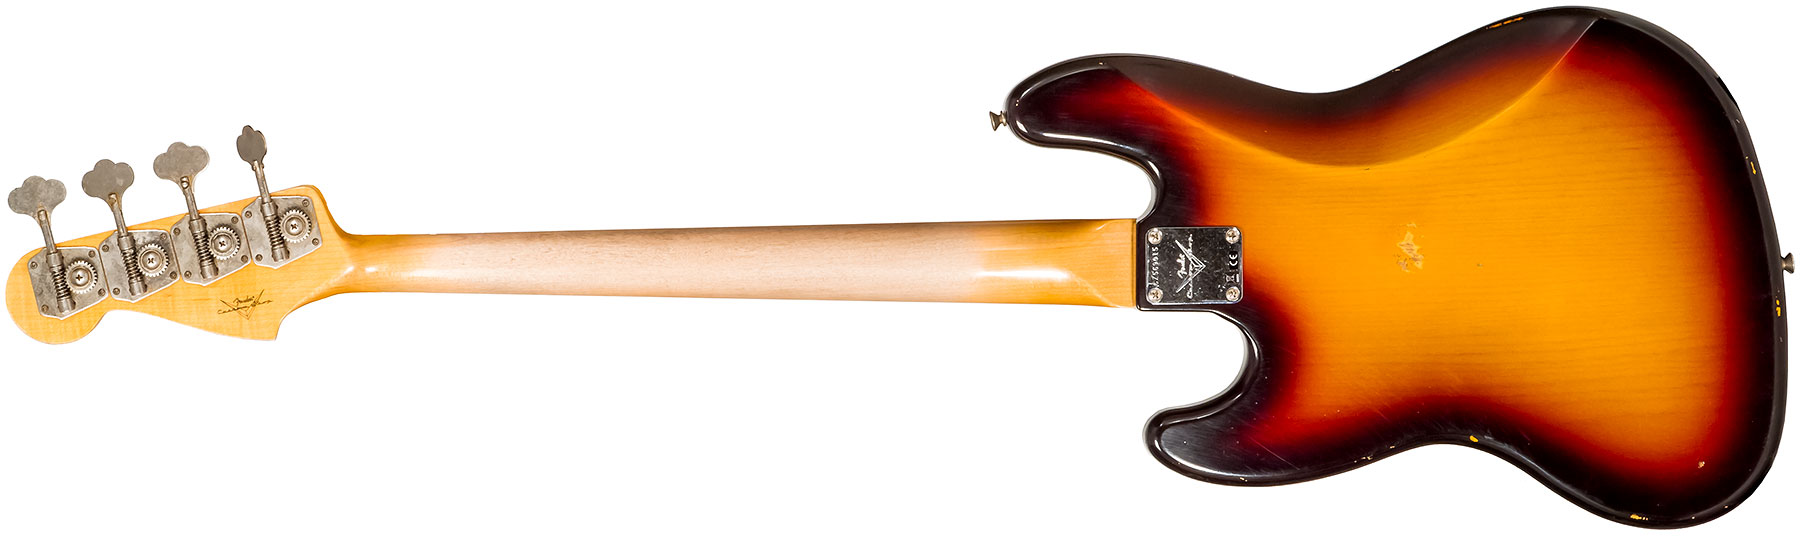 Fender Custom Shop  Jazz Bass 1962 Rw #cz569015 - Relic 3-color Sunburst - Solidbody E-bass - Variation 1